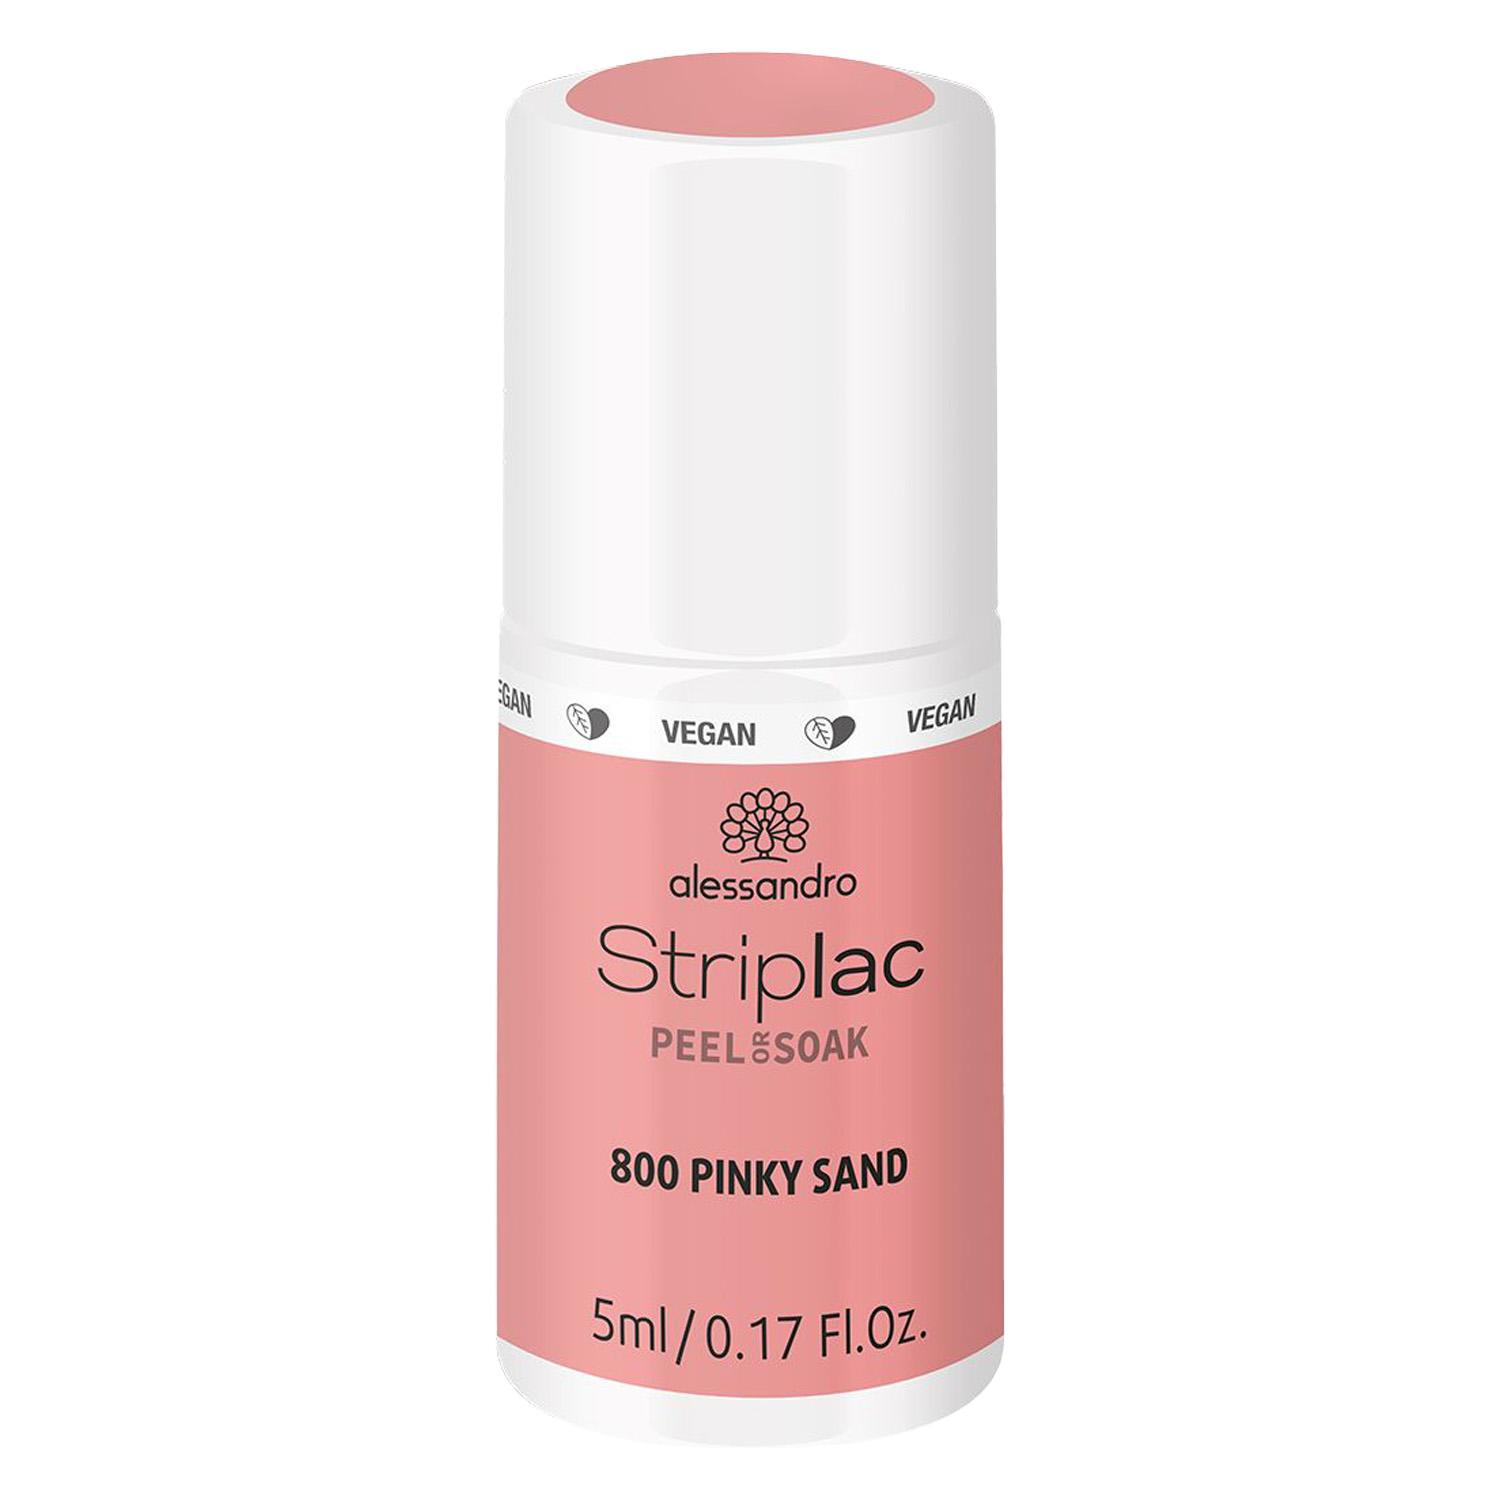 Striplac Peel or Soak - Pinky Sand